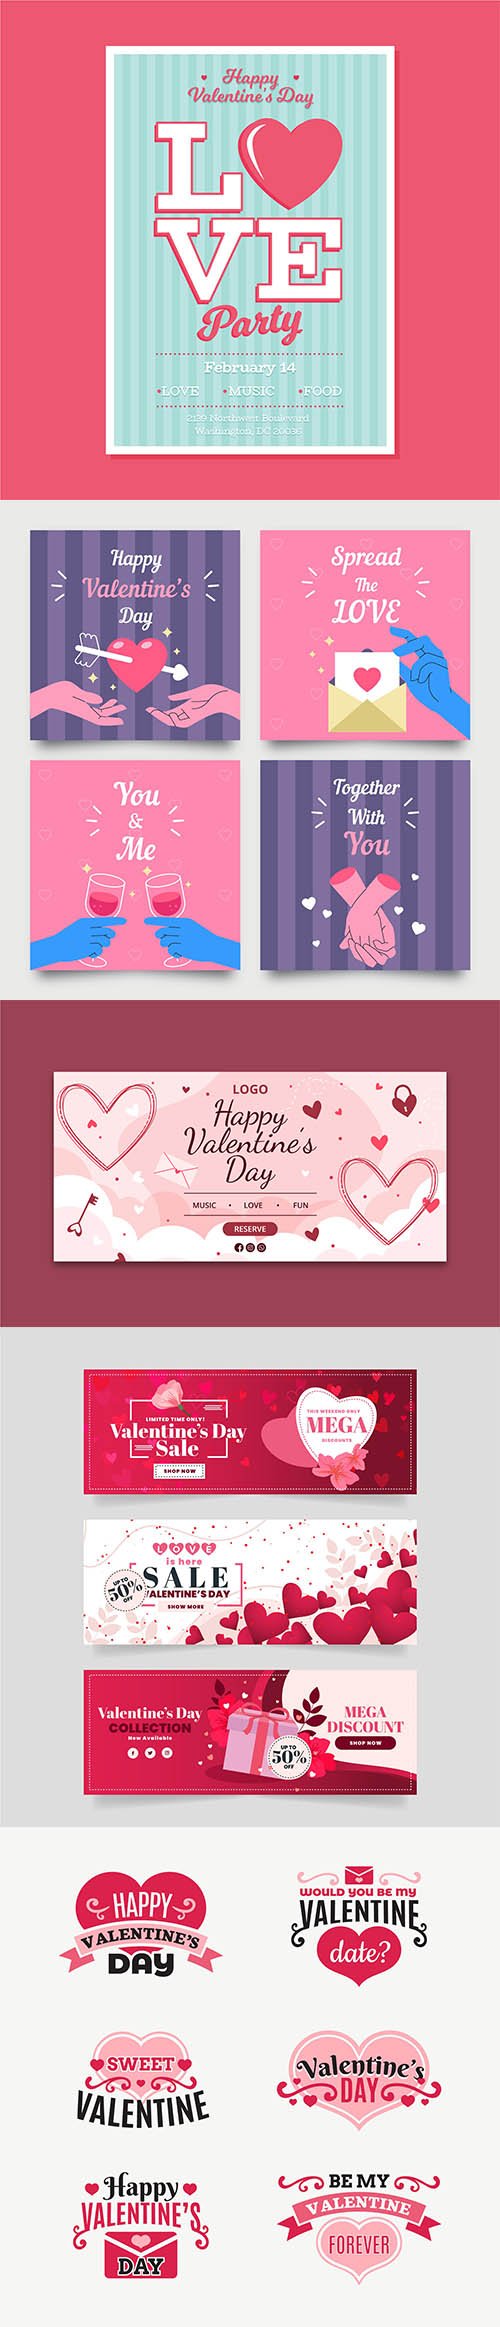 Happy Valentines day vector collection vol 2